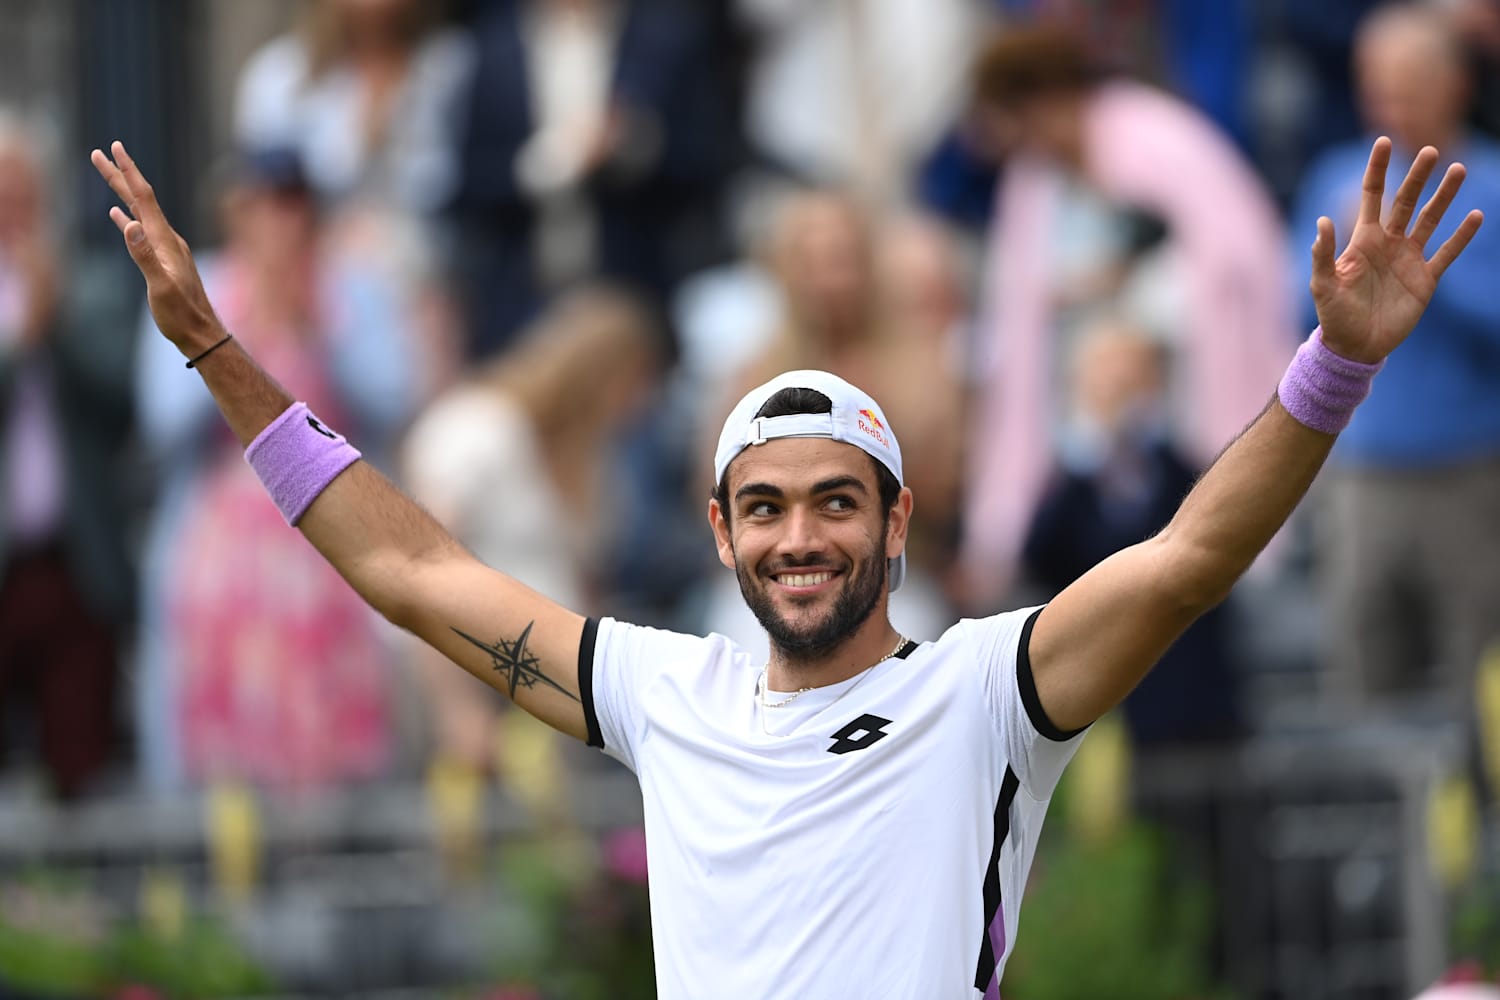 Matteo Berrettini Get to know the Wimbledon finalist